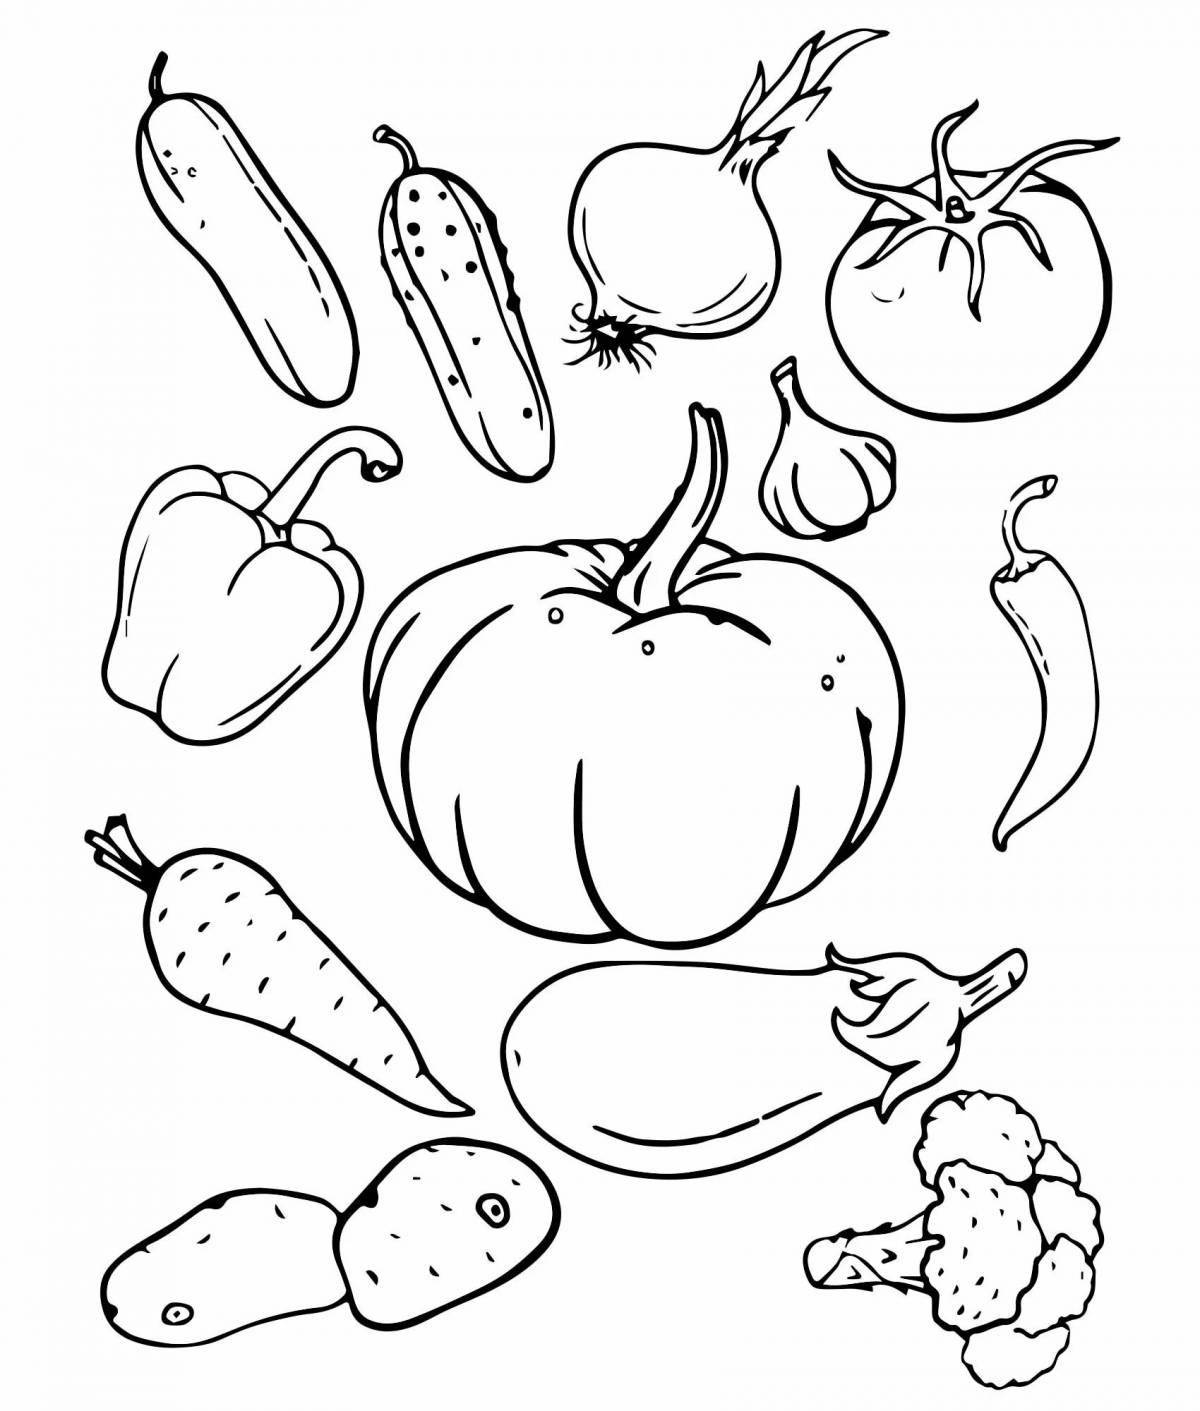 Humorous vinaigrette vegetable coloring book